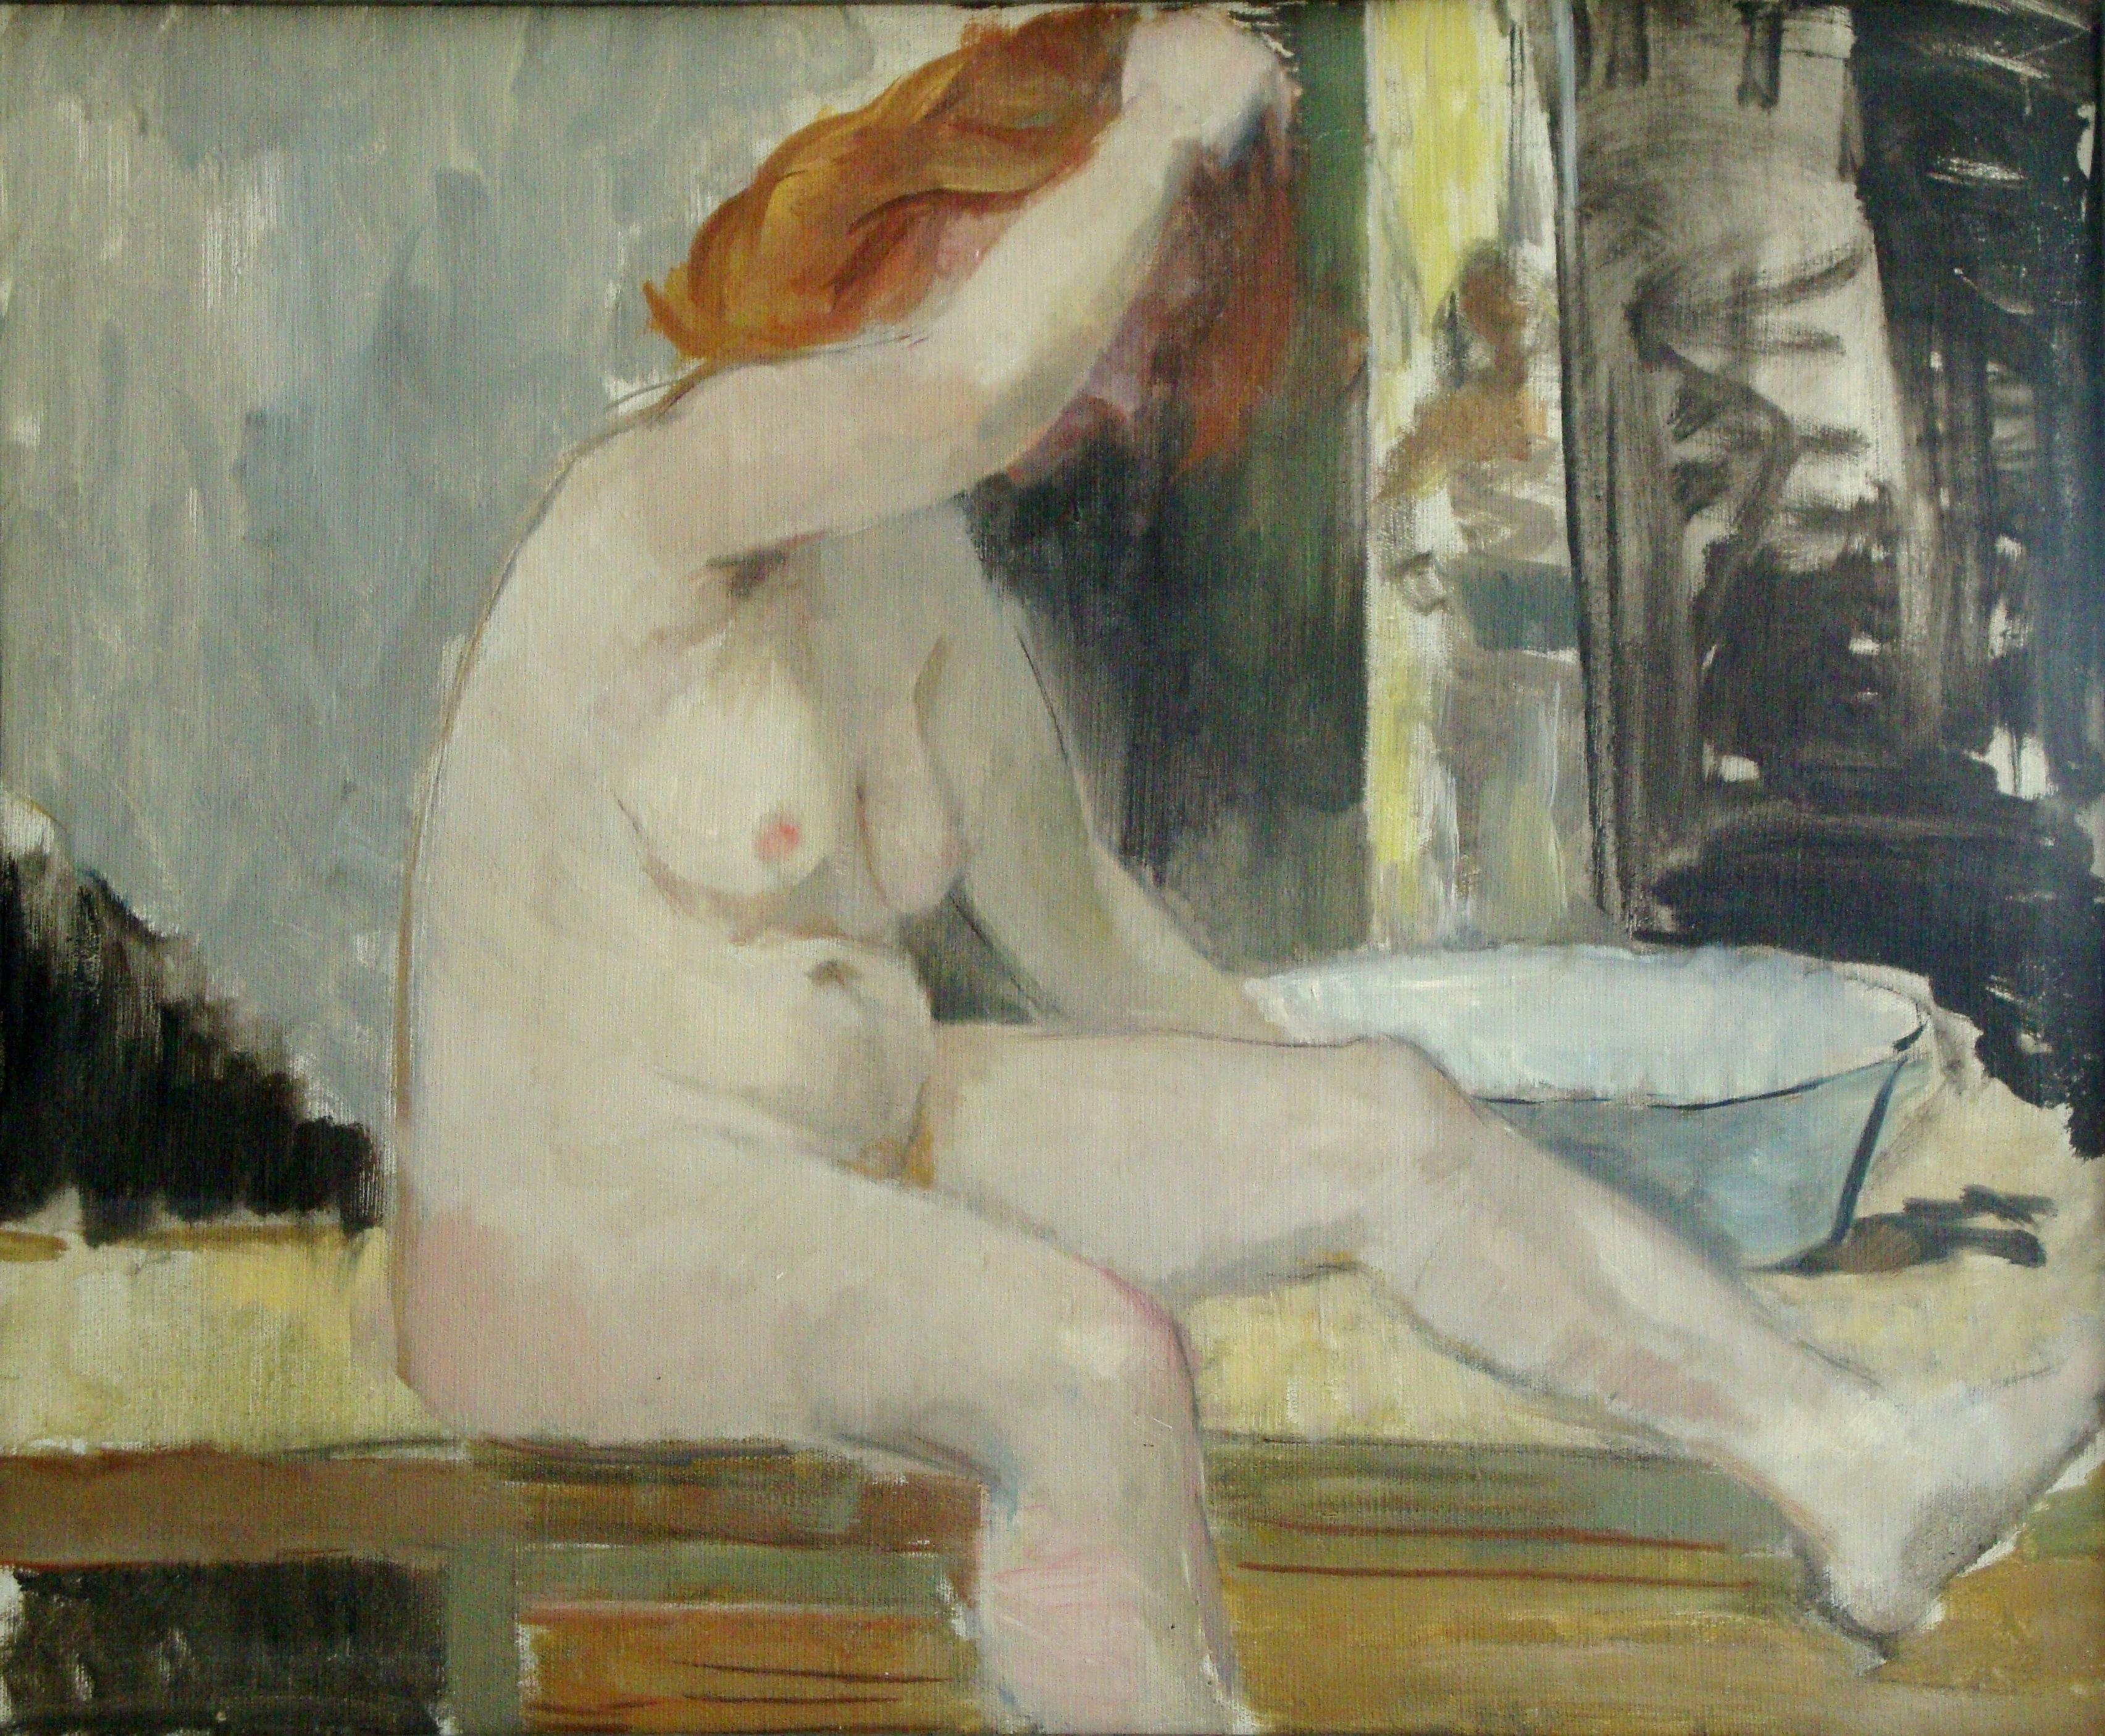 Aleksandra Belcova Figurative Painting - Nude  1960s. Oil on canvas. 60x73 cm